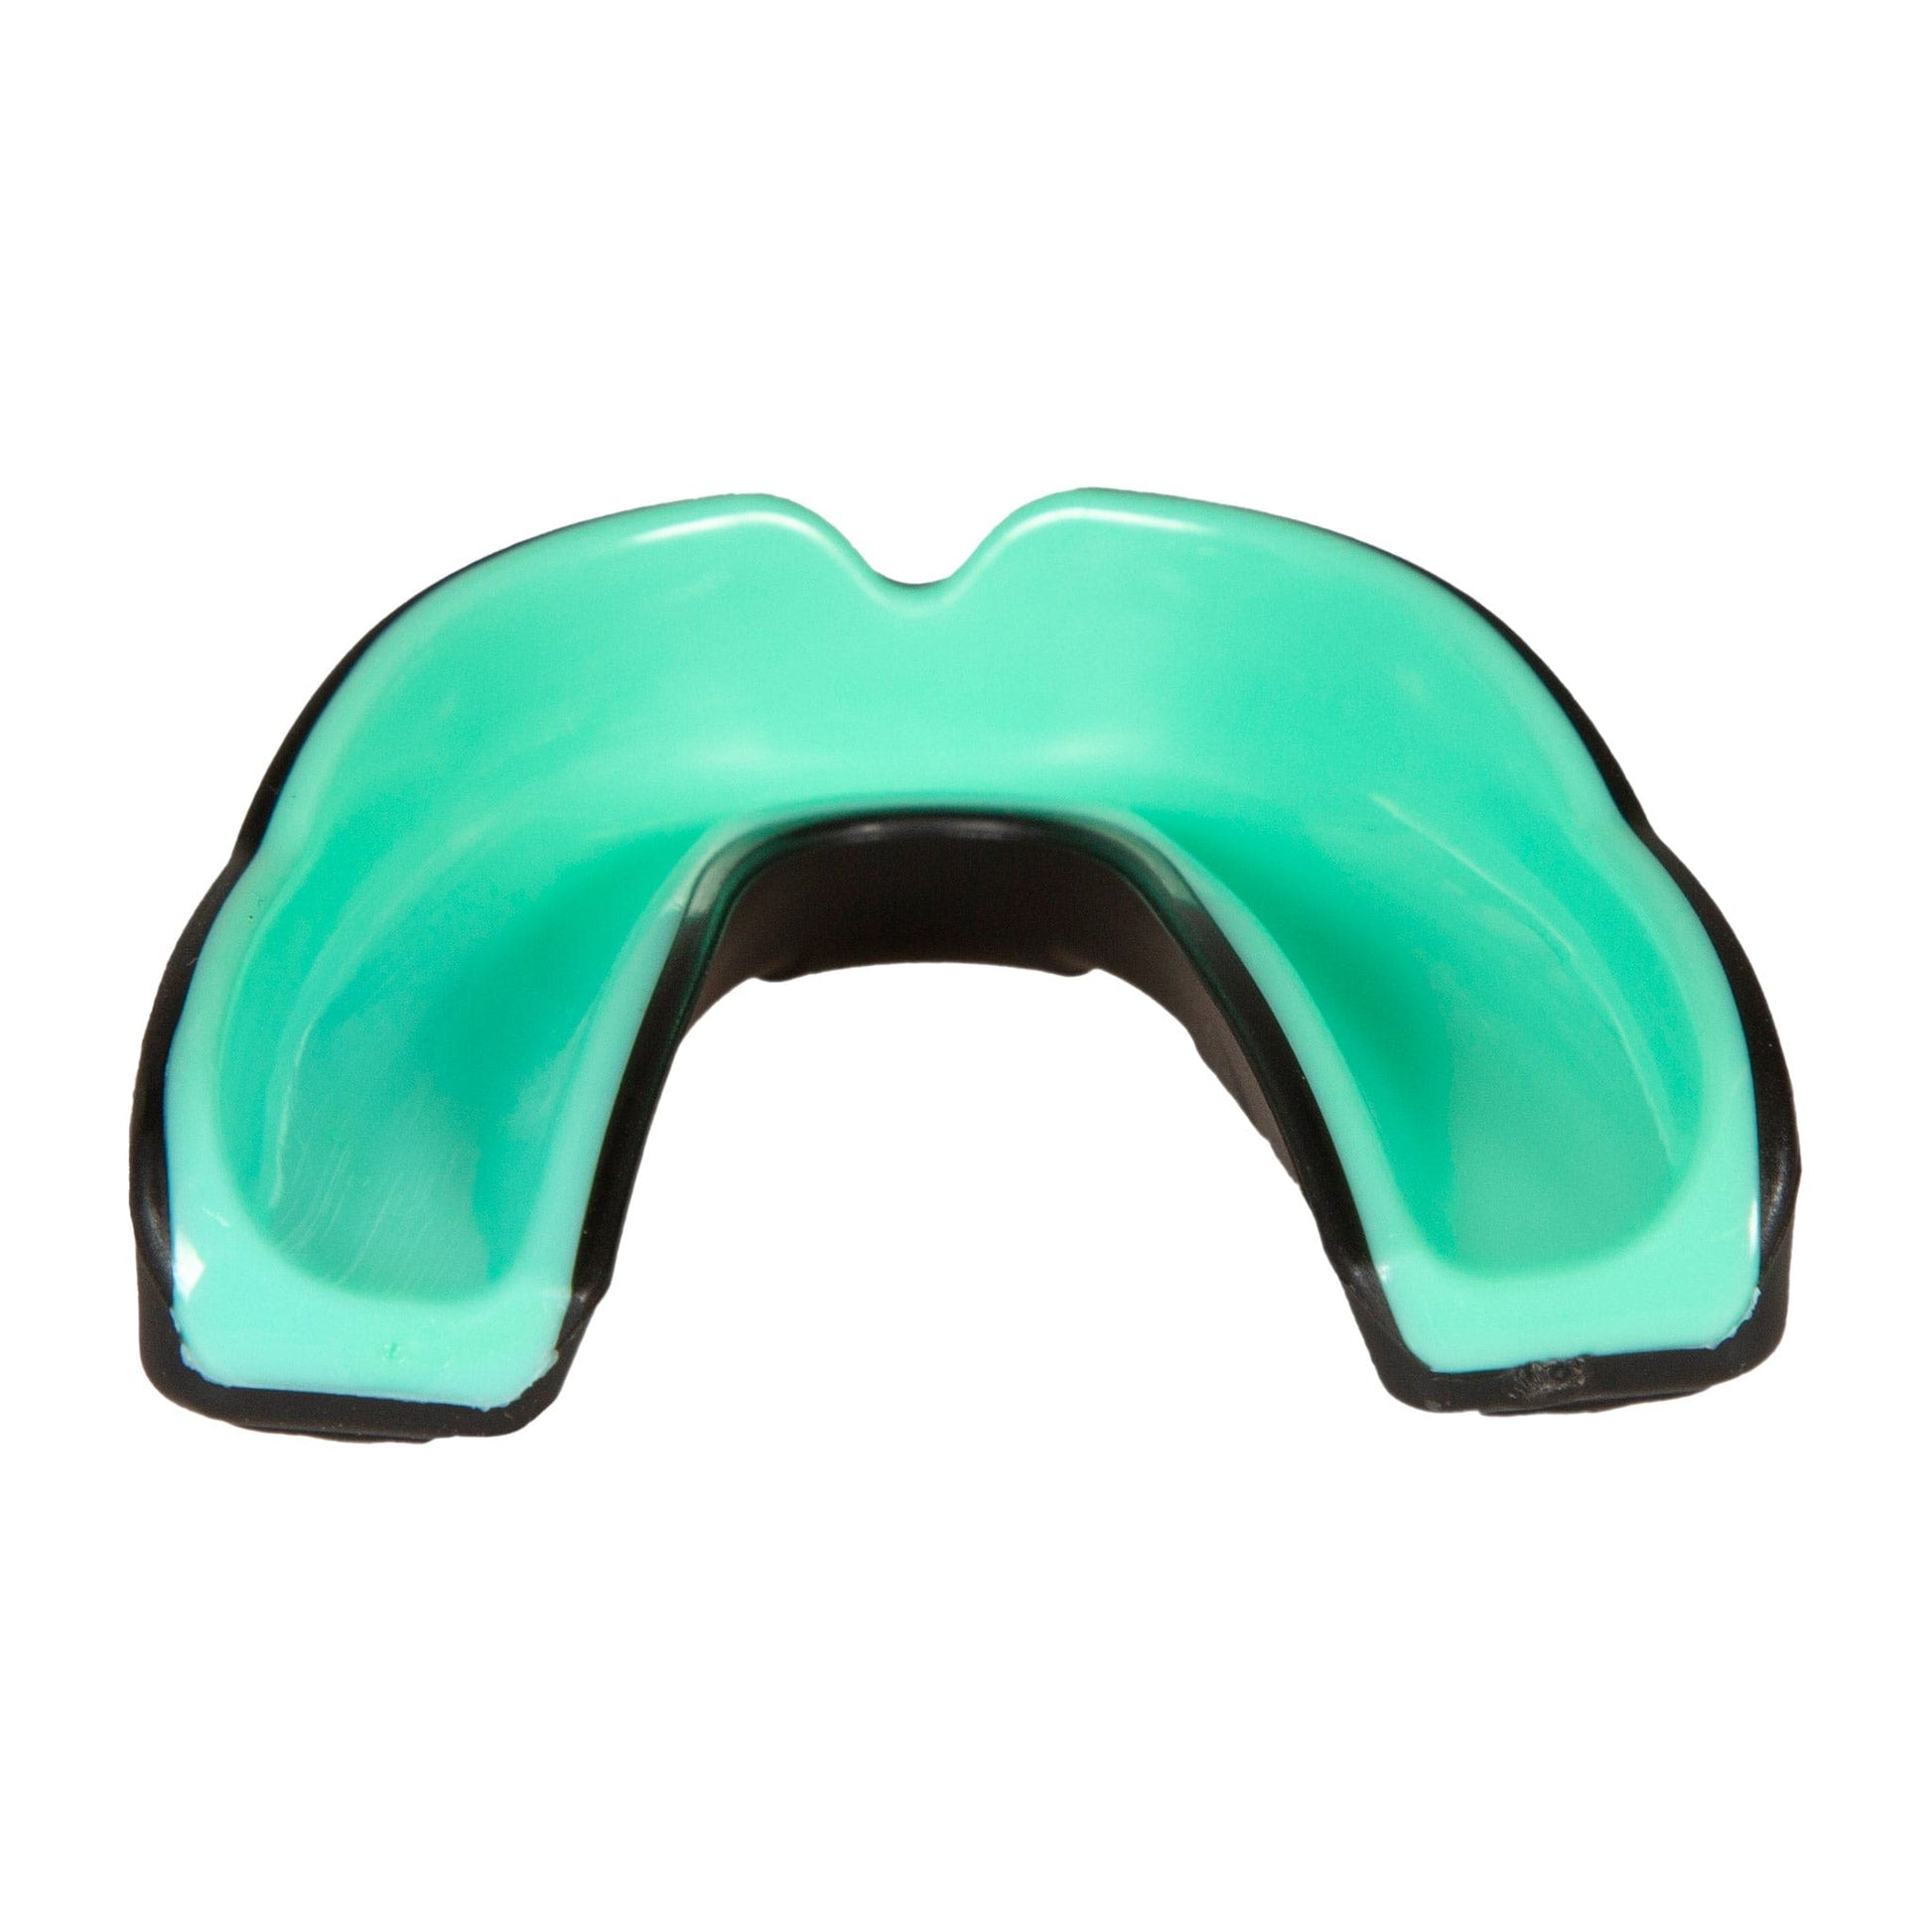 ProForce Sporting Goods Green Proforce Dual Cushion Mouthguard Mouth Piece